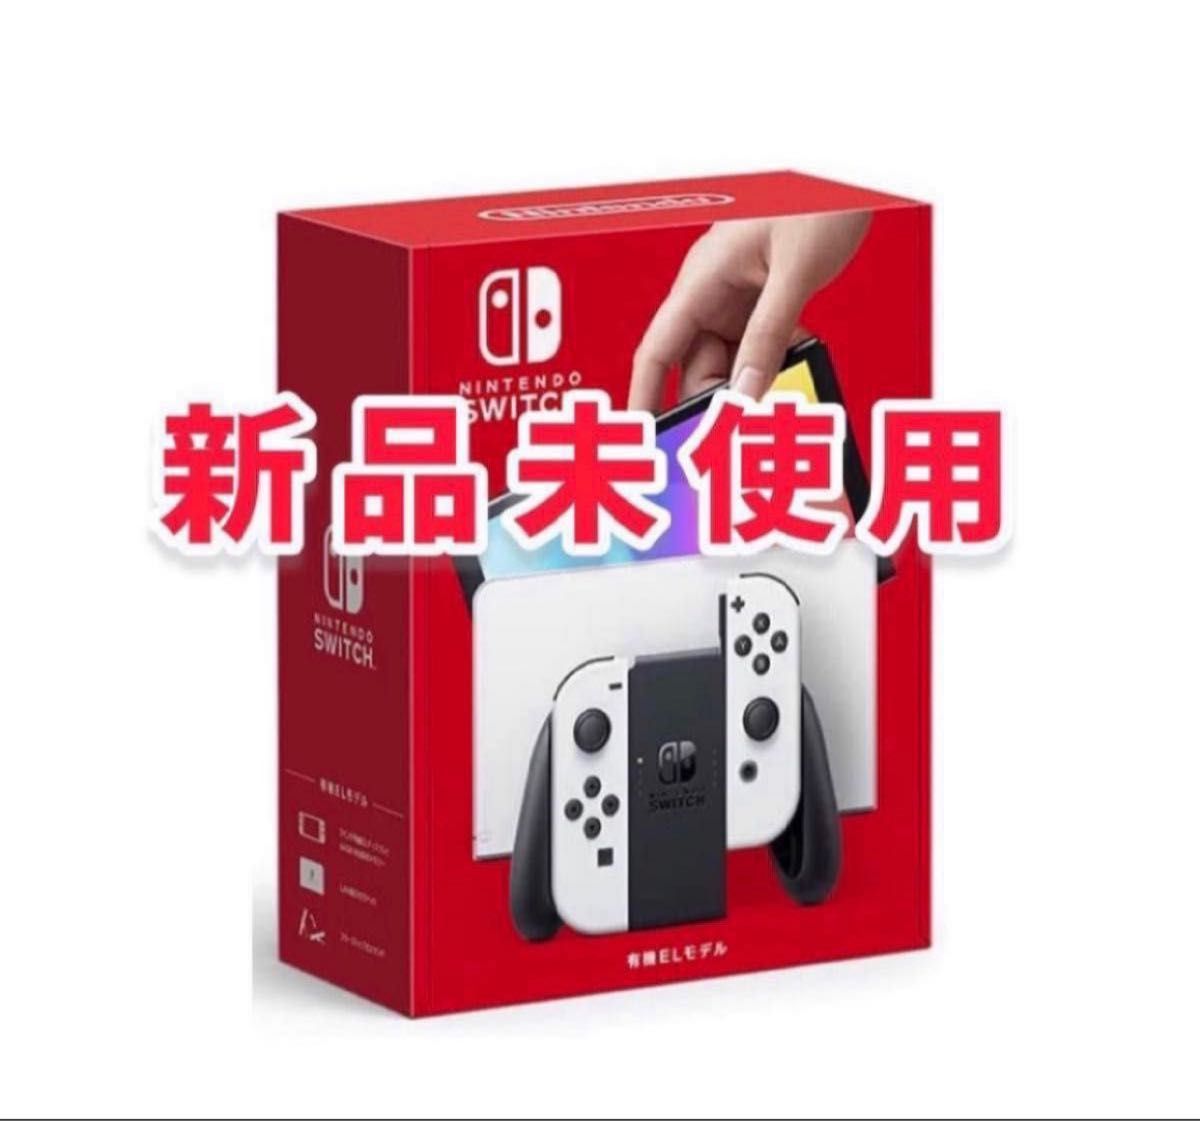 Nintendo switch 有機elモデル ホワイトの新品・未使用品・中古品(4